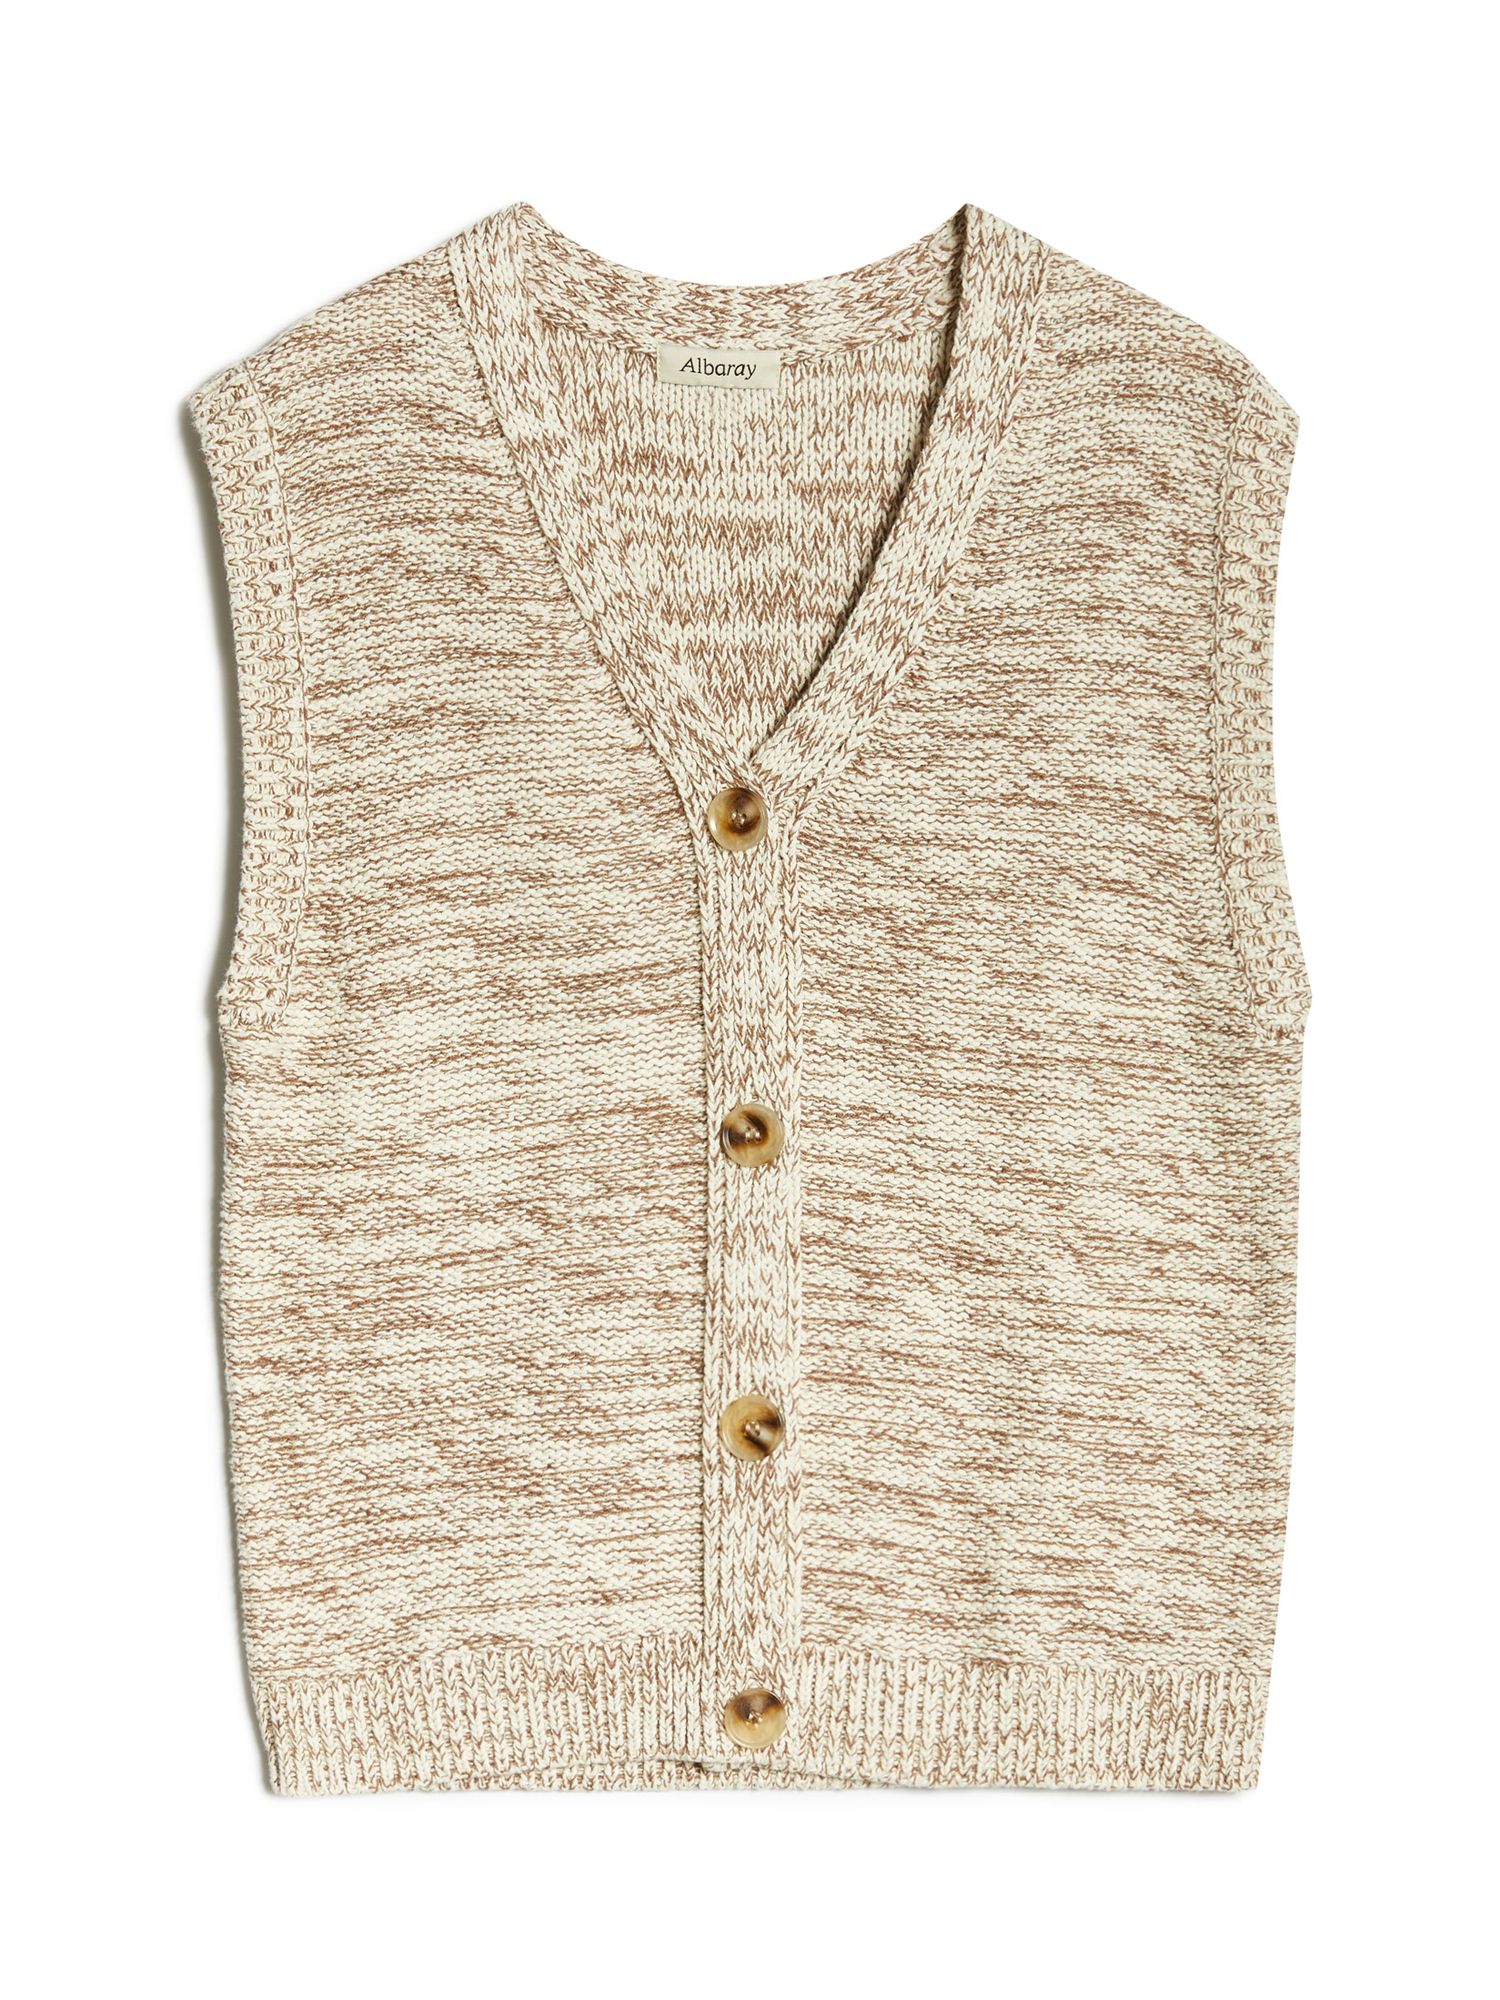 Buy Albaray Tweed Knitted Waistcoat, Brown Online at johnlewis.com